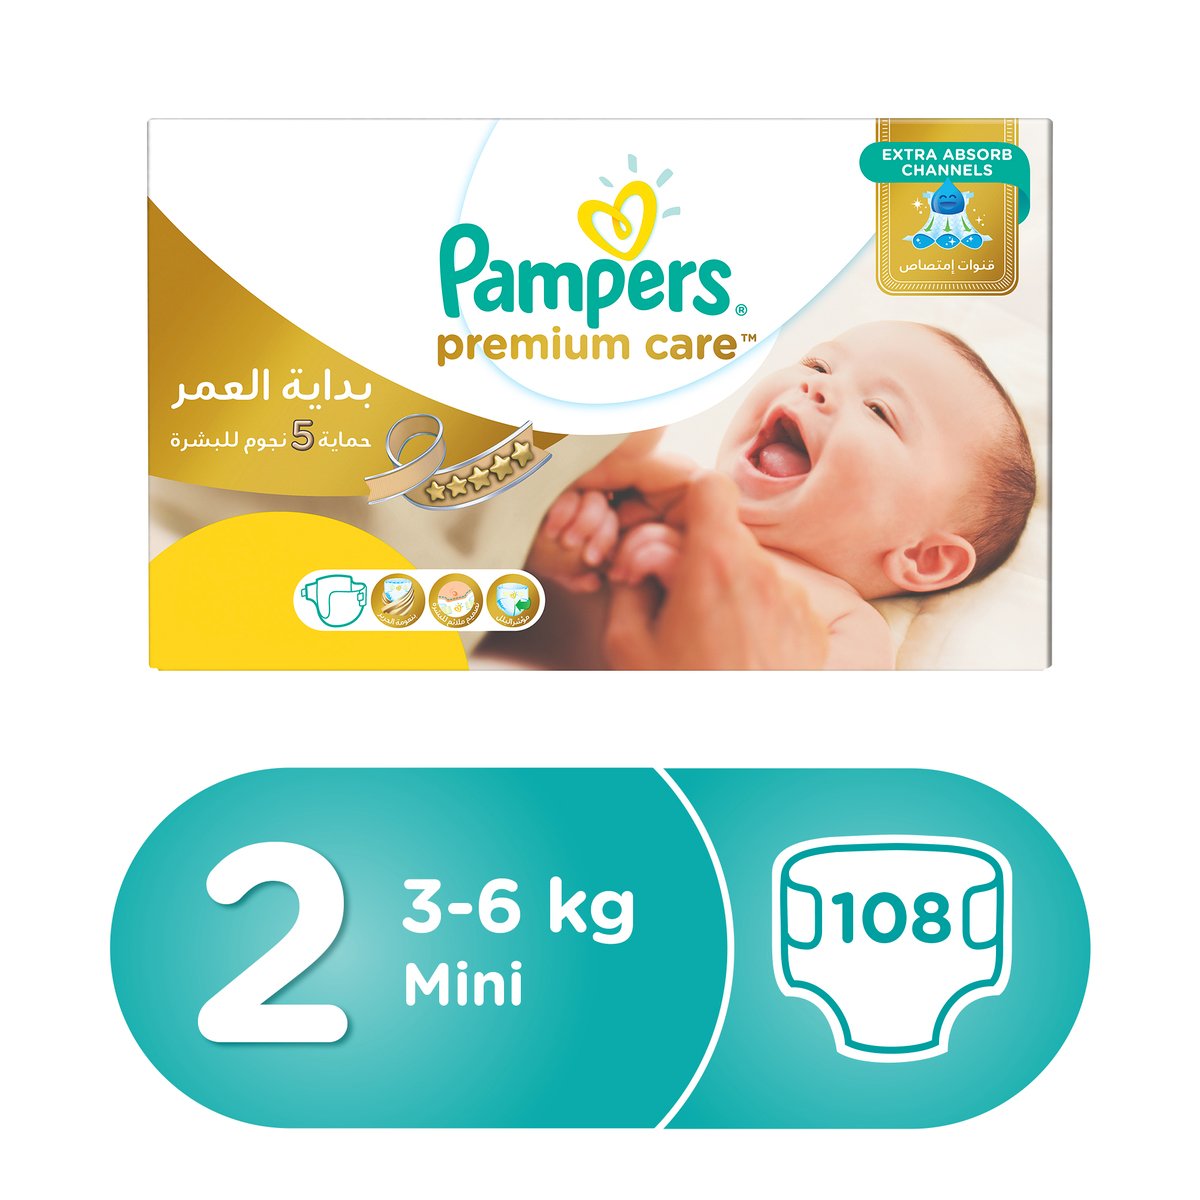 Pampers Premium Care Diapers, Size 2, Mini, 3-6kg, Mega Box, 108pcs Count